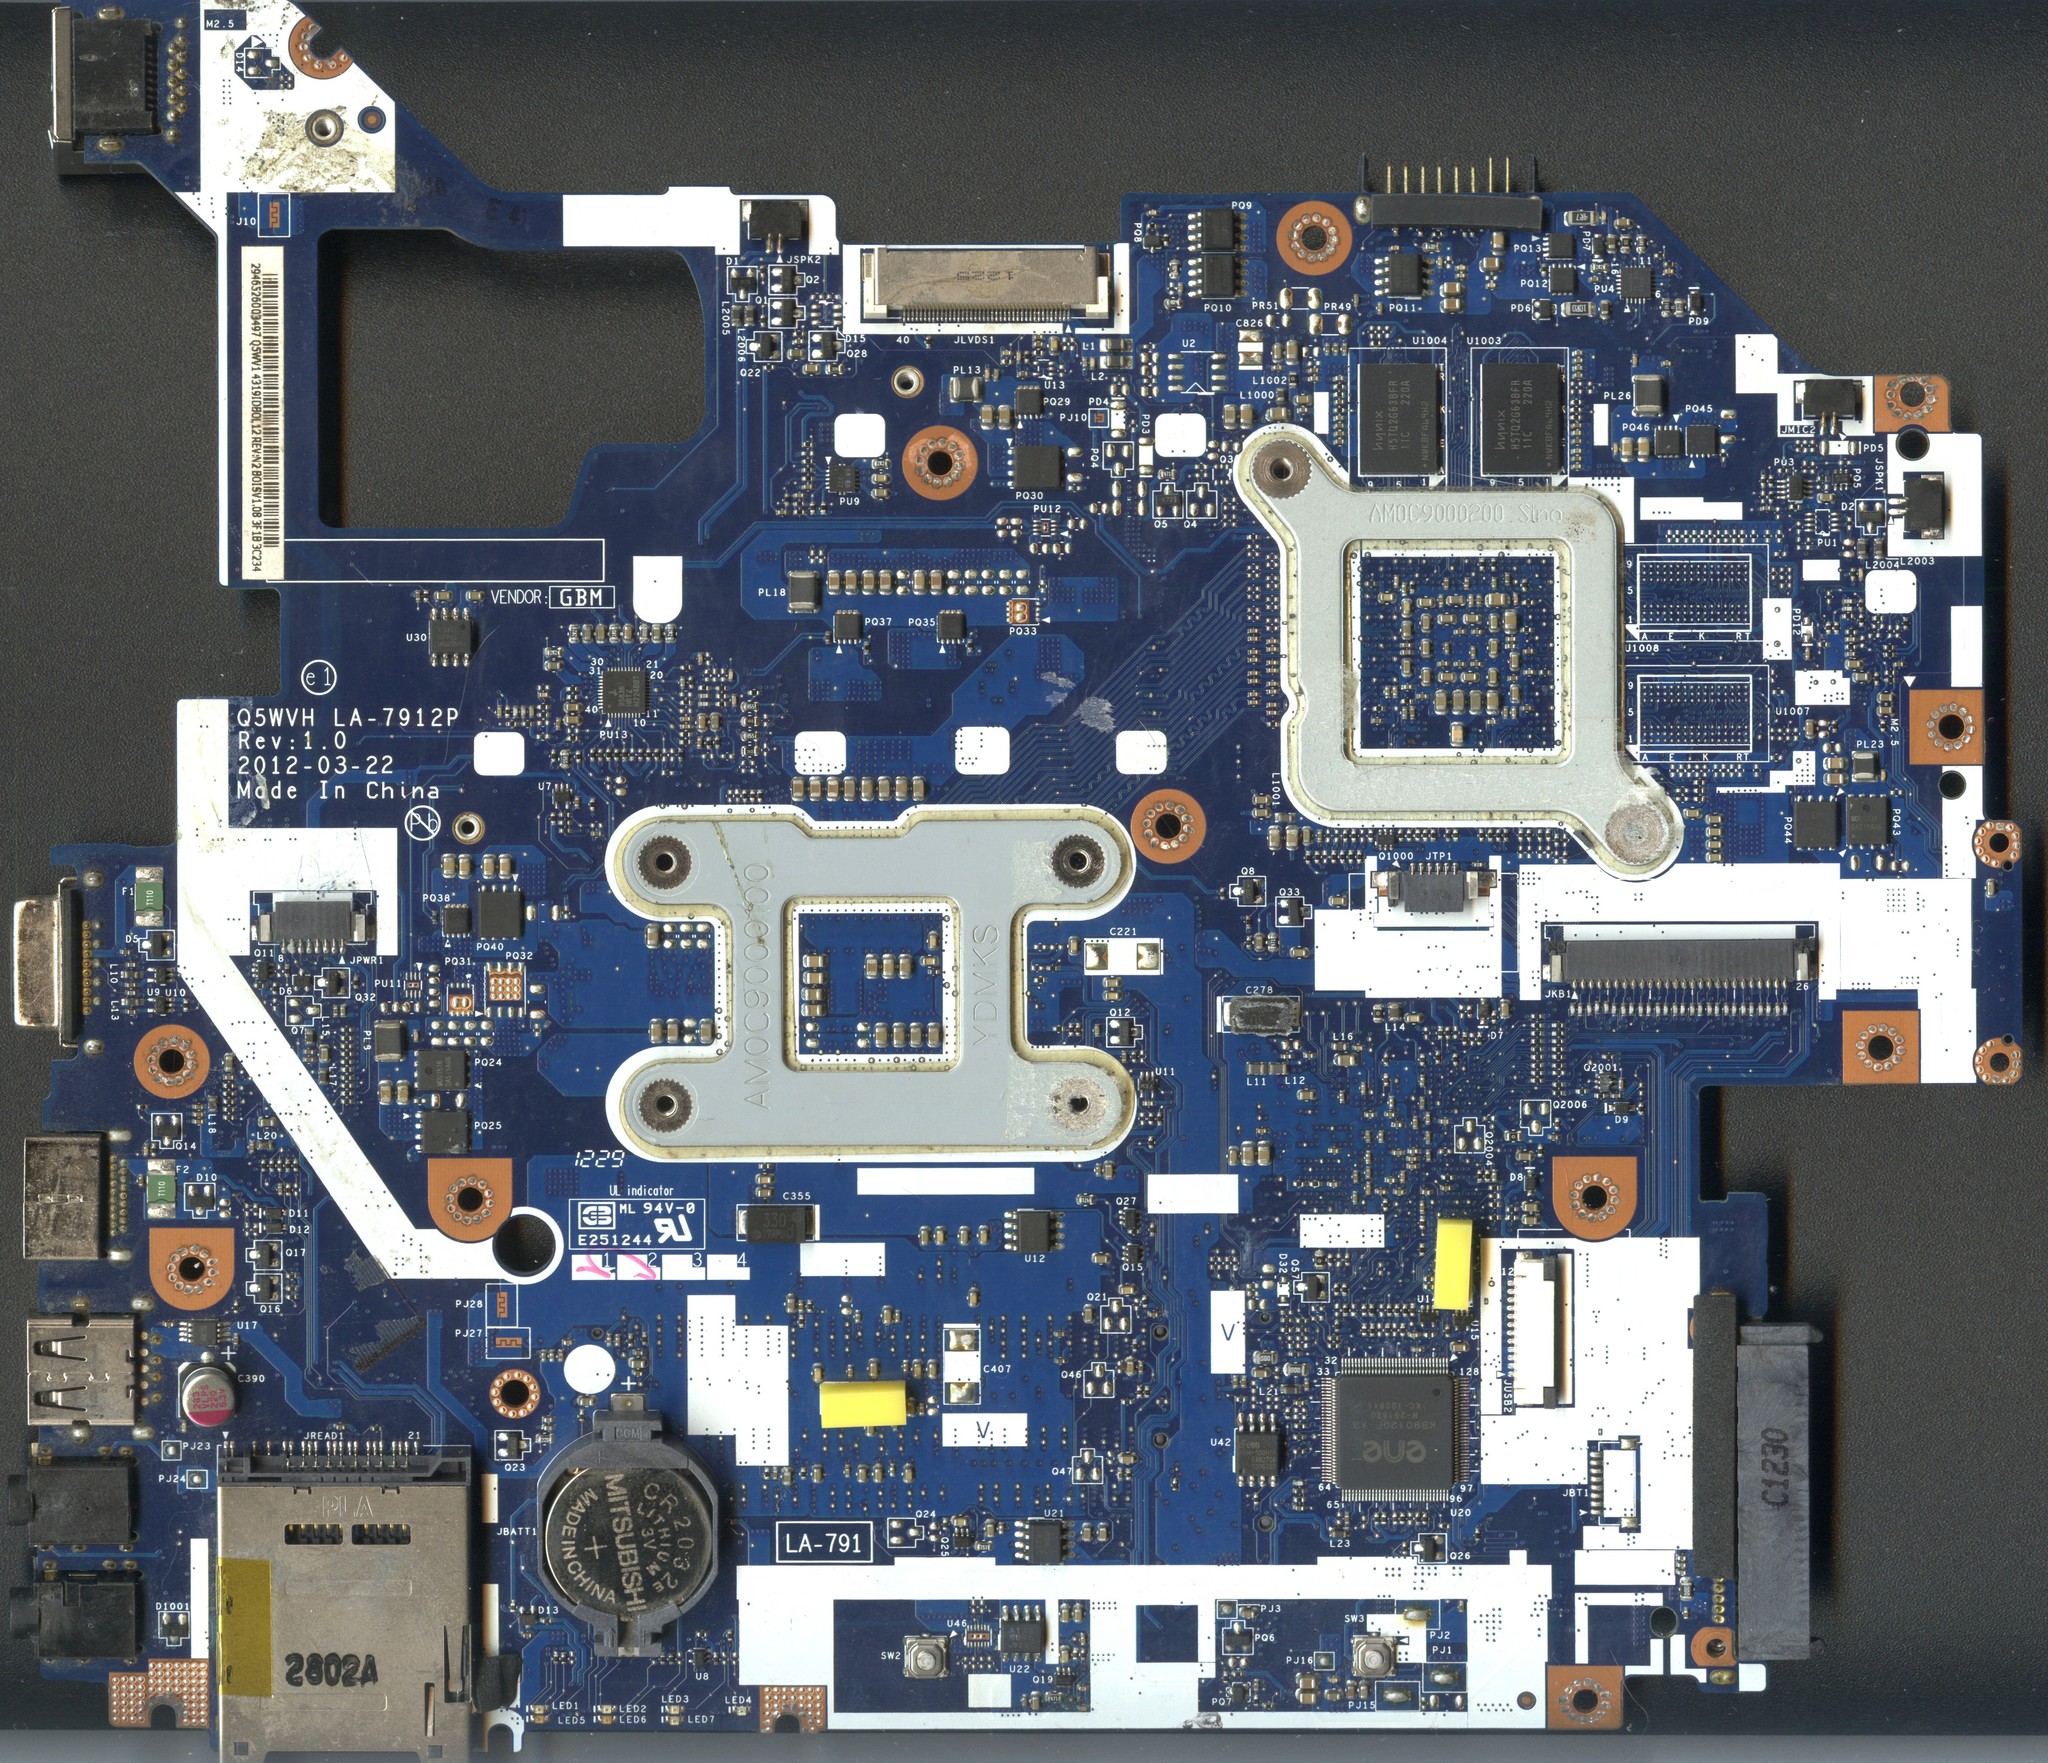 Схема к ноутбуку Acer E1-571G (Q5WVH LA-7912P Rev:2.0)